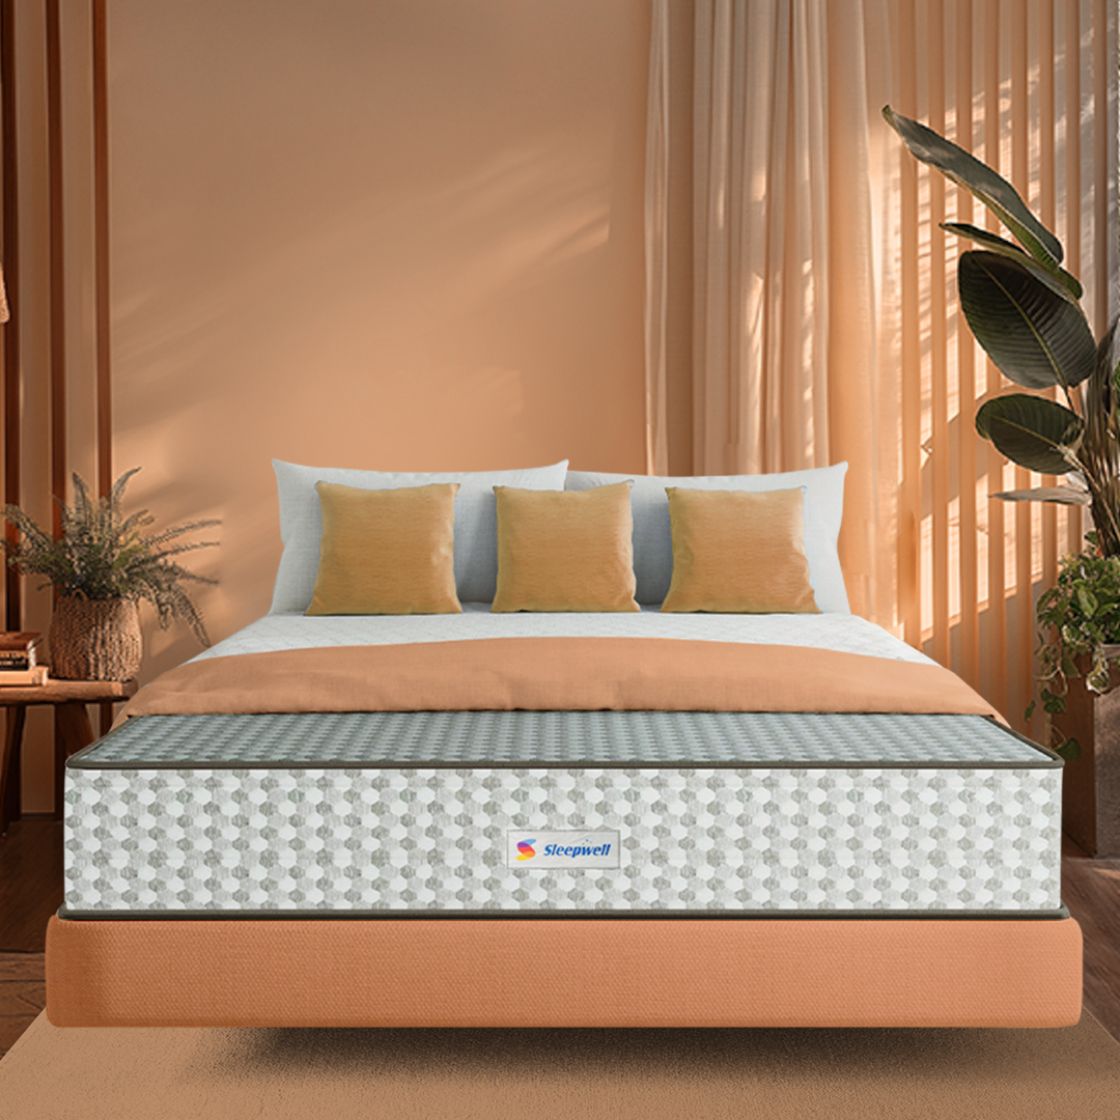 Sleepwell Dual PRO Profiled Foam Reversible 5-inch King Bed Size, Gentle and Firm, Triple Layered Anti Sag Foam Mattress (Grey, 75x70x5)